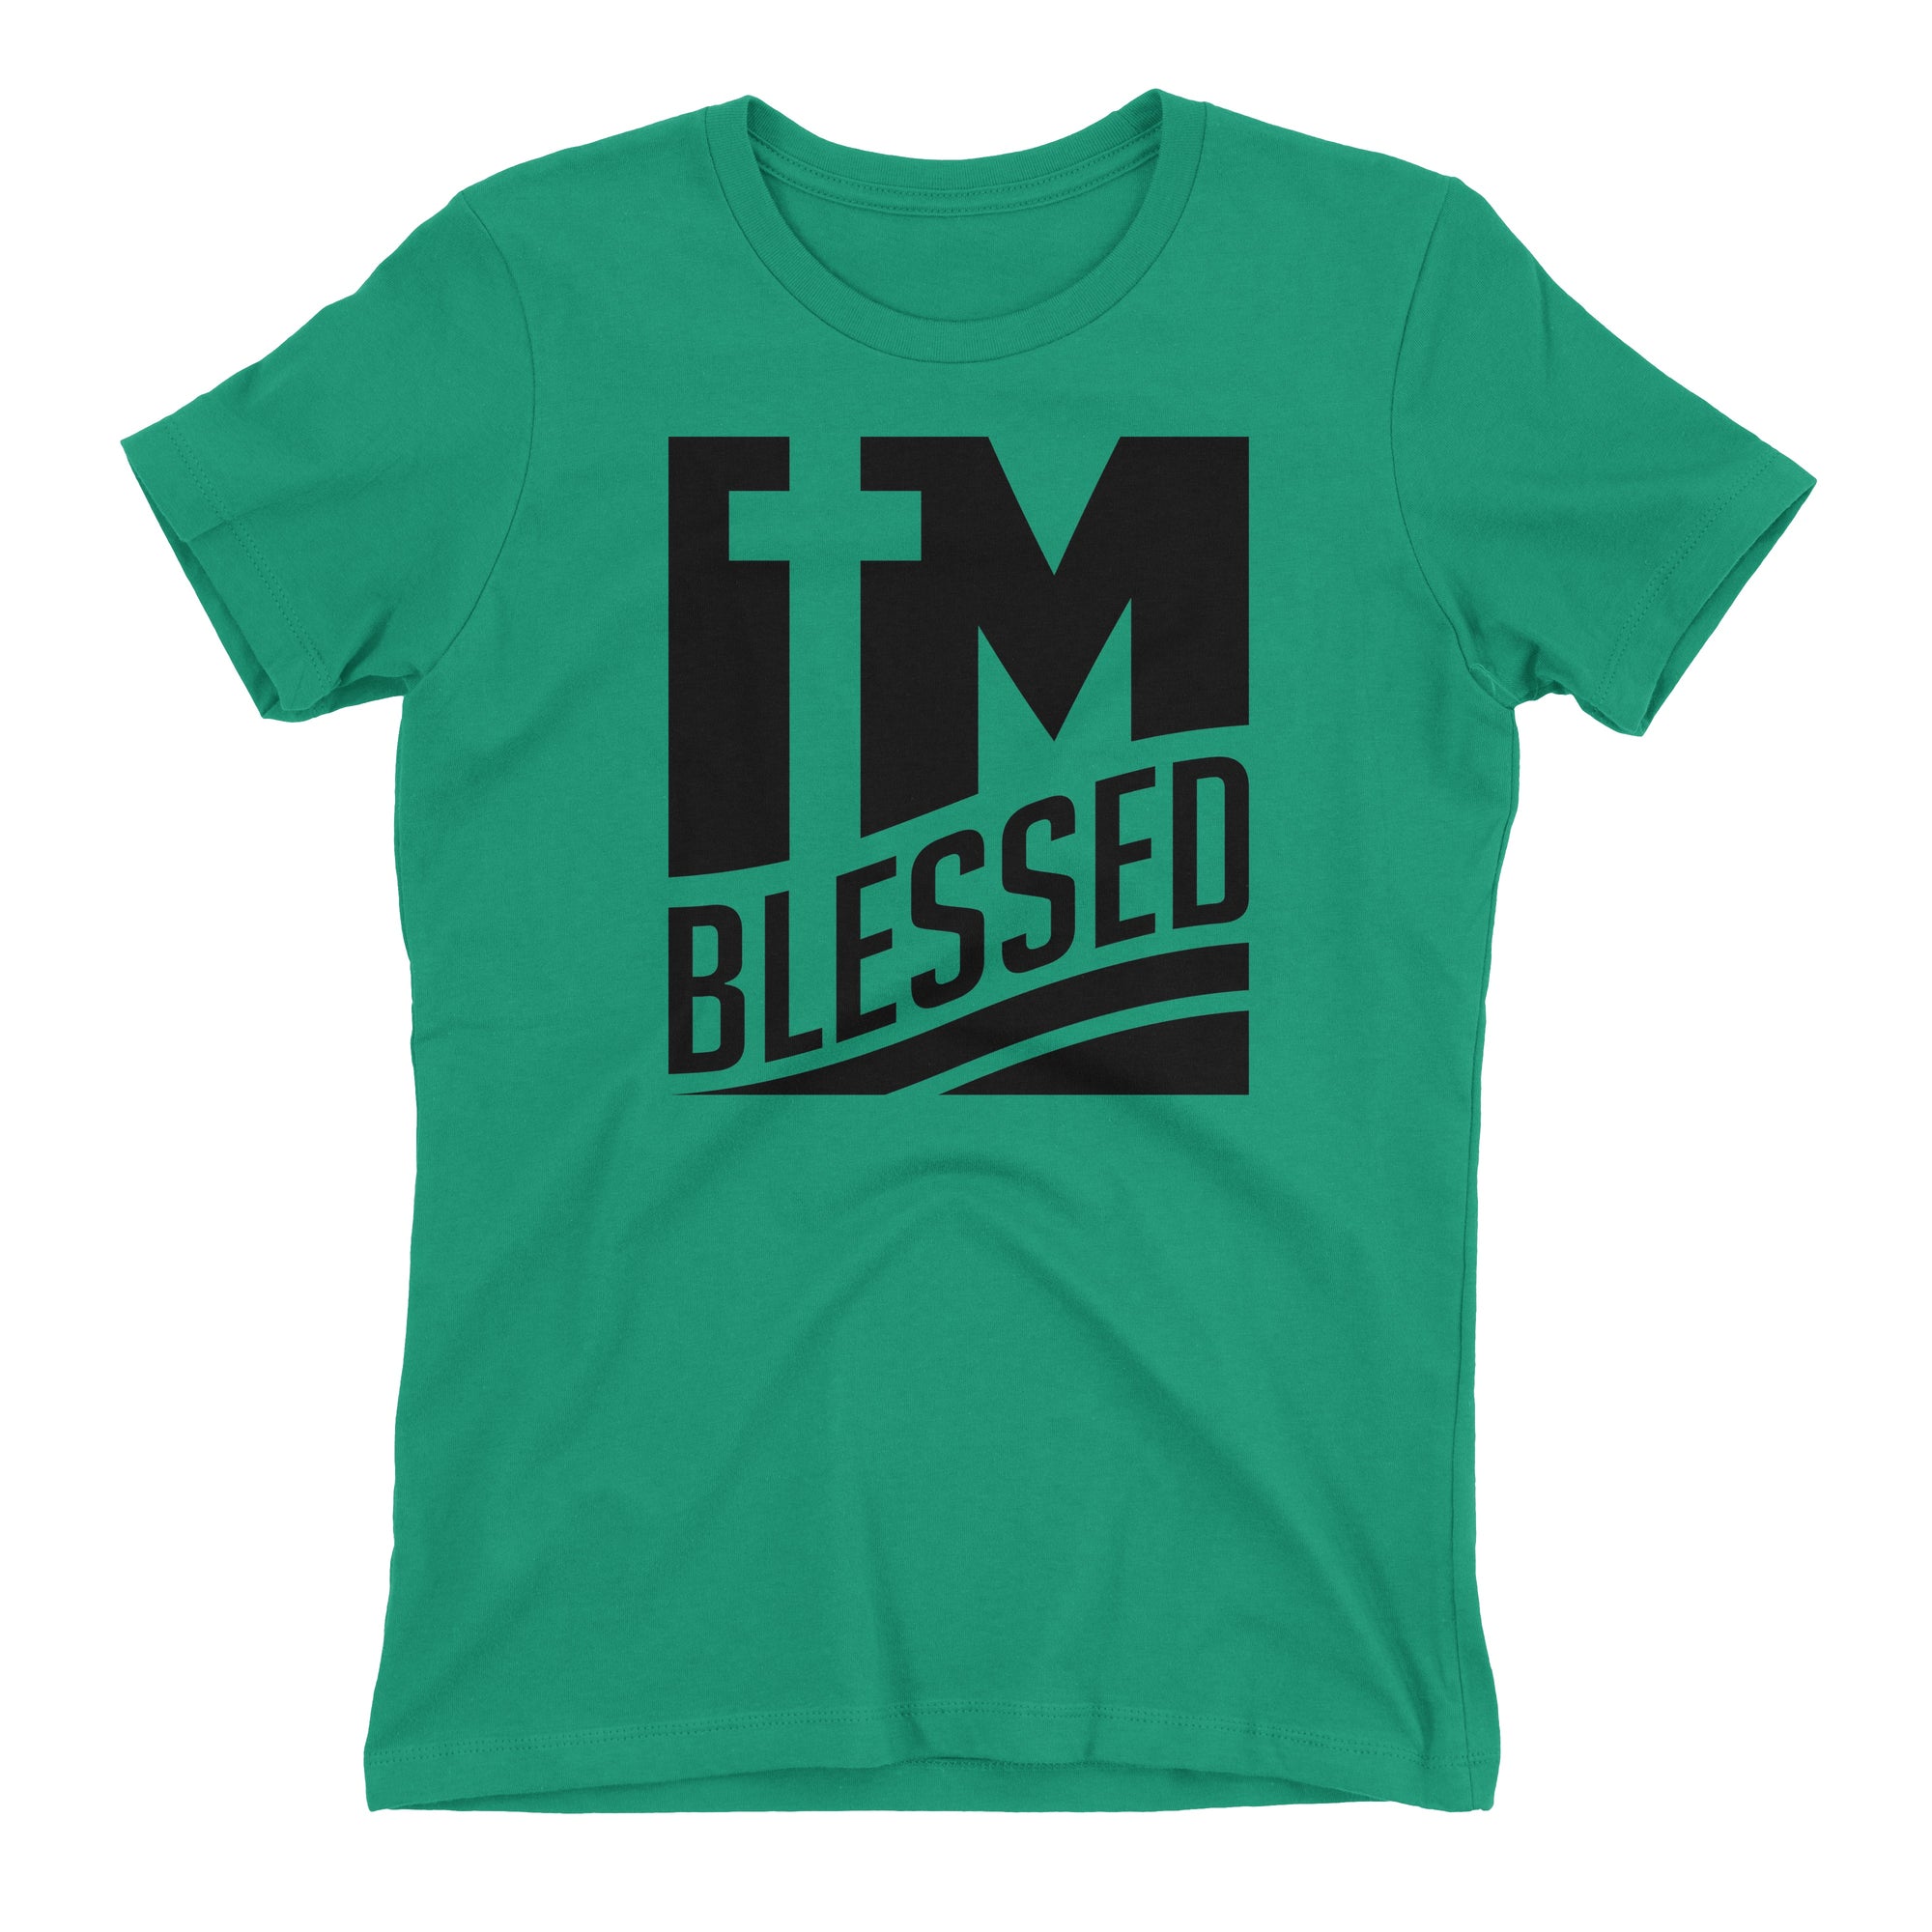 I'm Blessed T-Shirt for Juniors